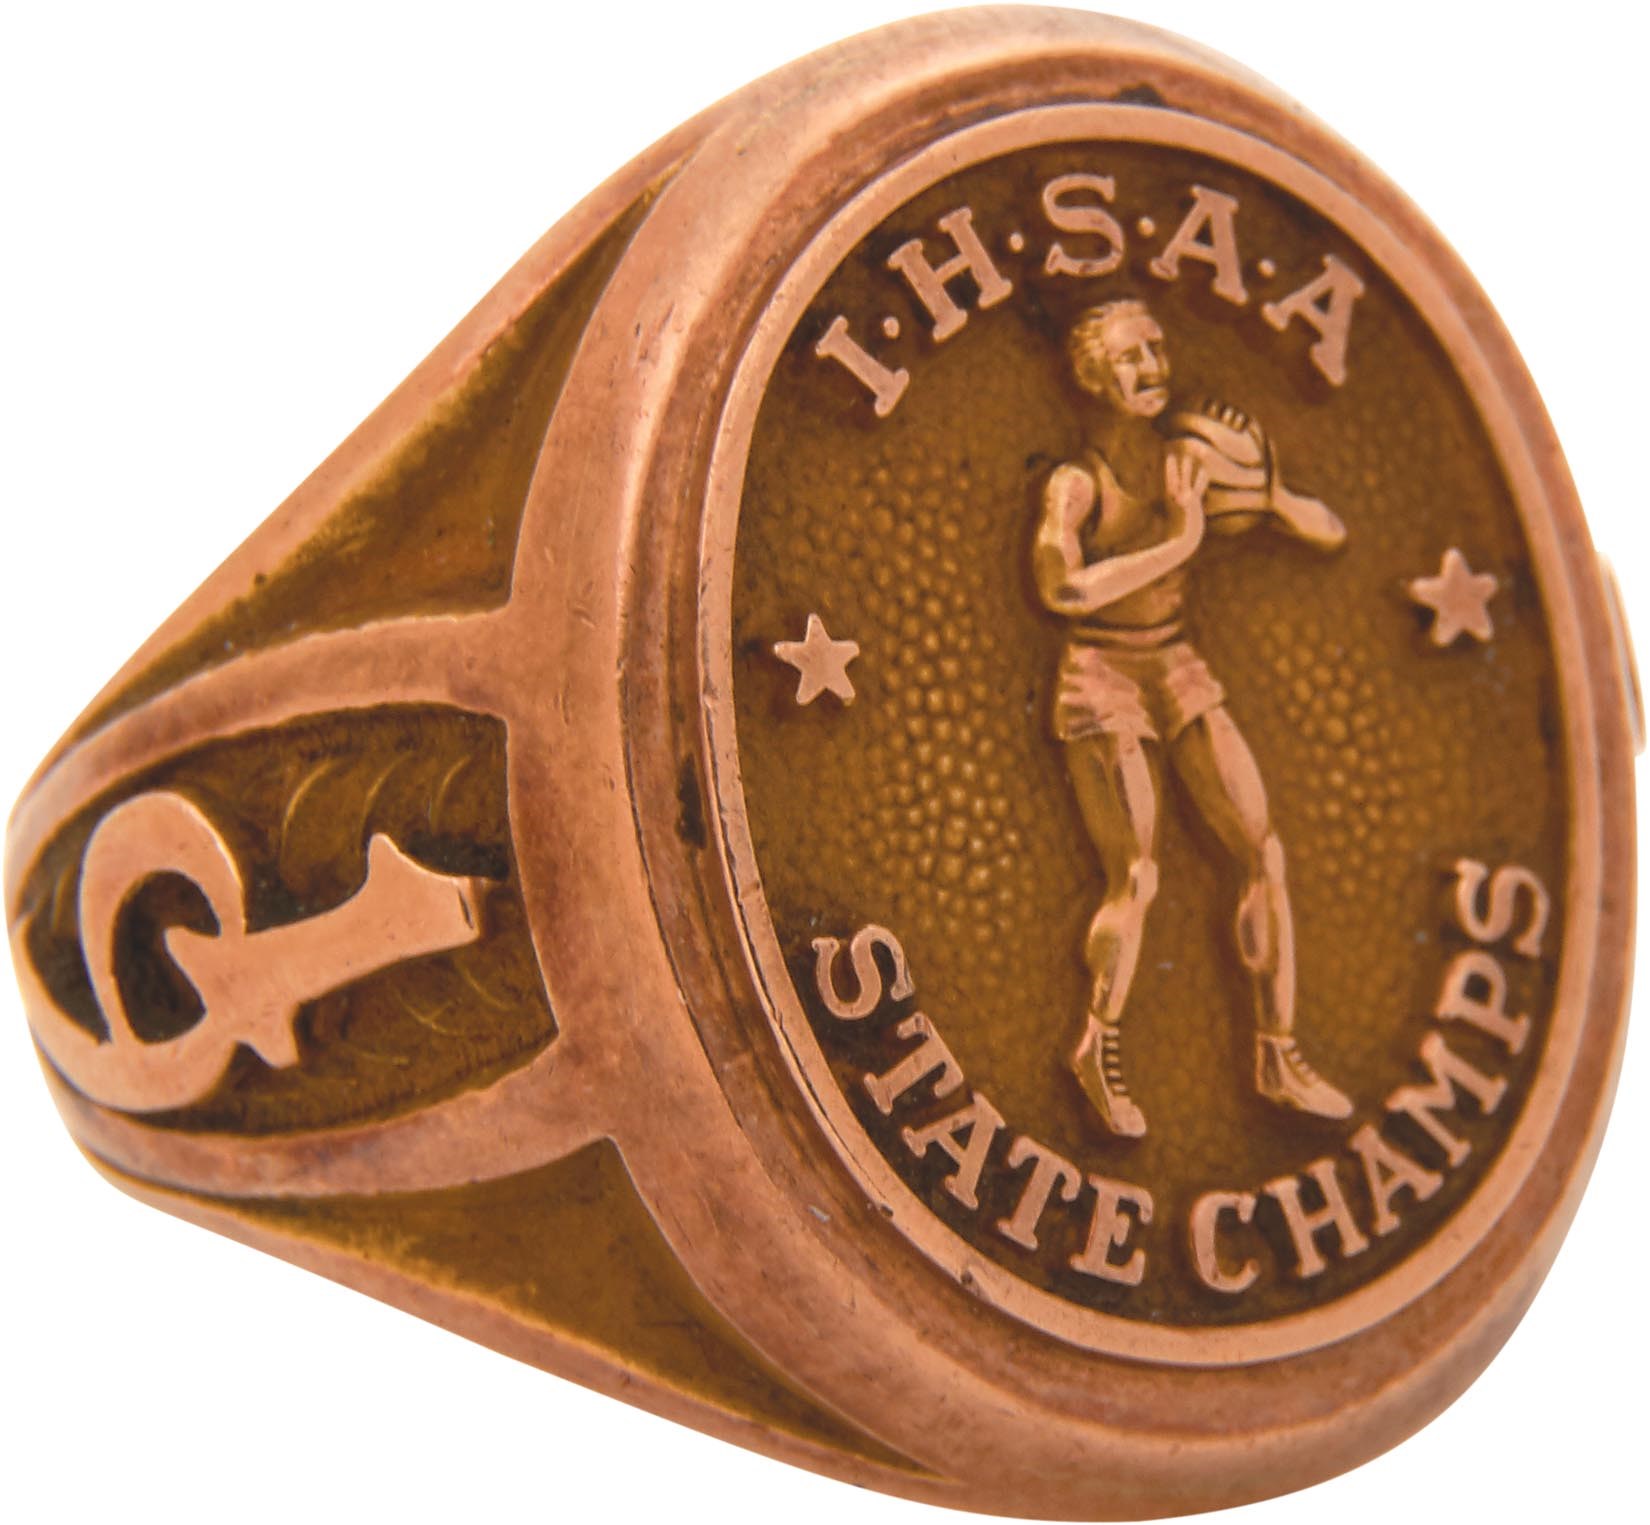 - 1956 Oscar Robertson Crispus Attucks Indiana High School Basketball Championship Ring